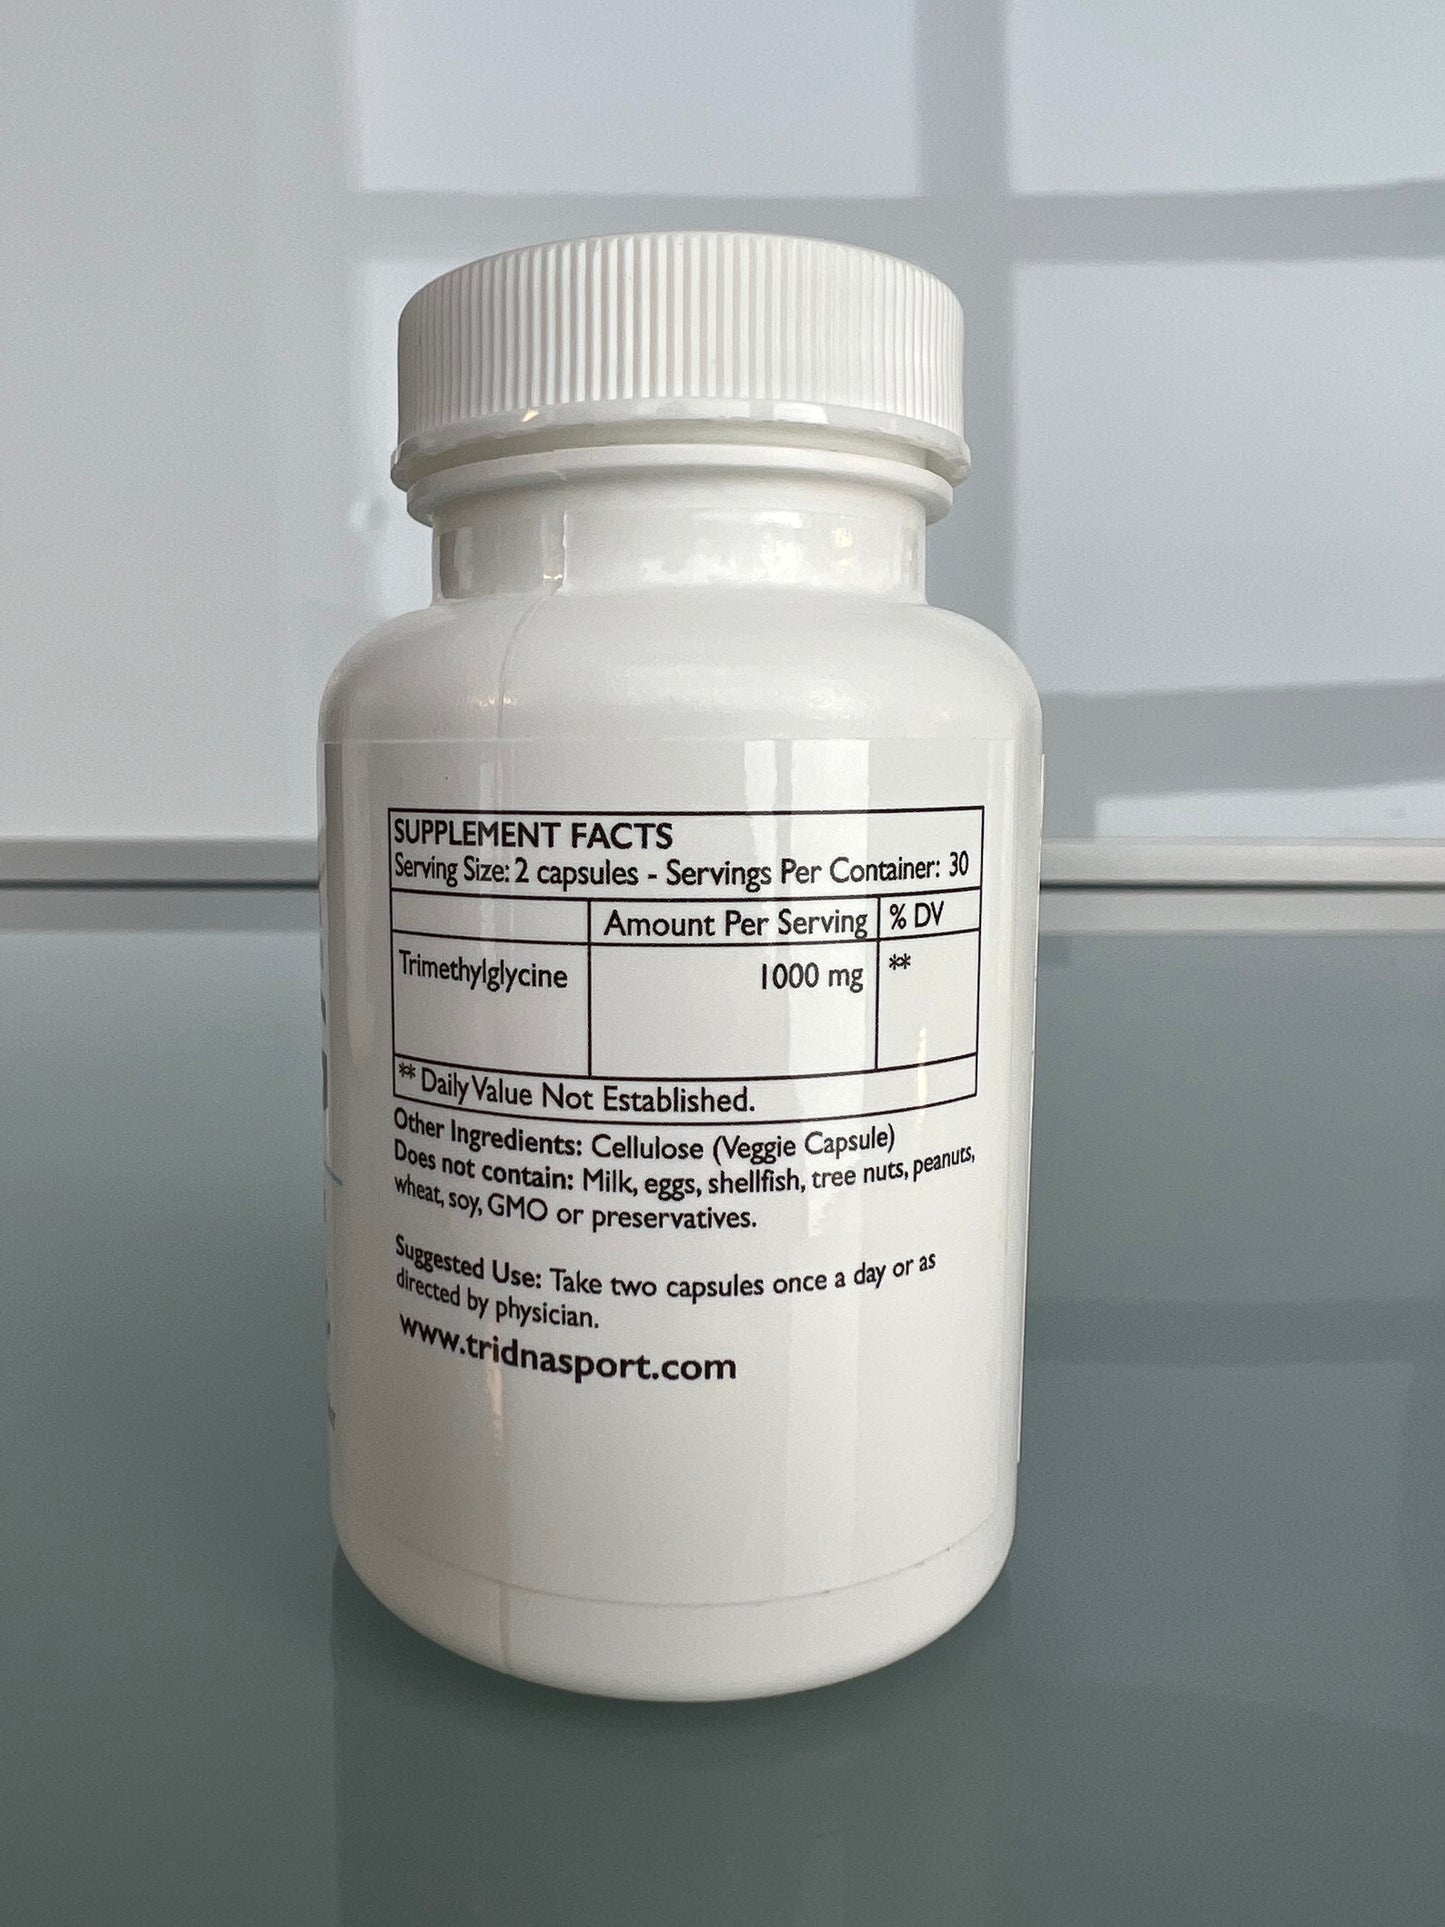 TMG Trimethylglycine 1000 mg